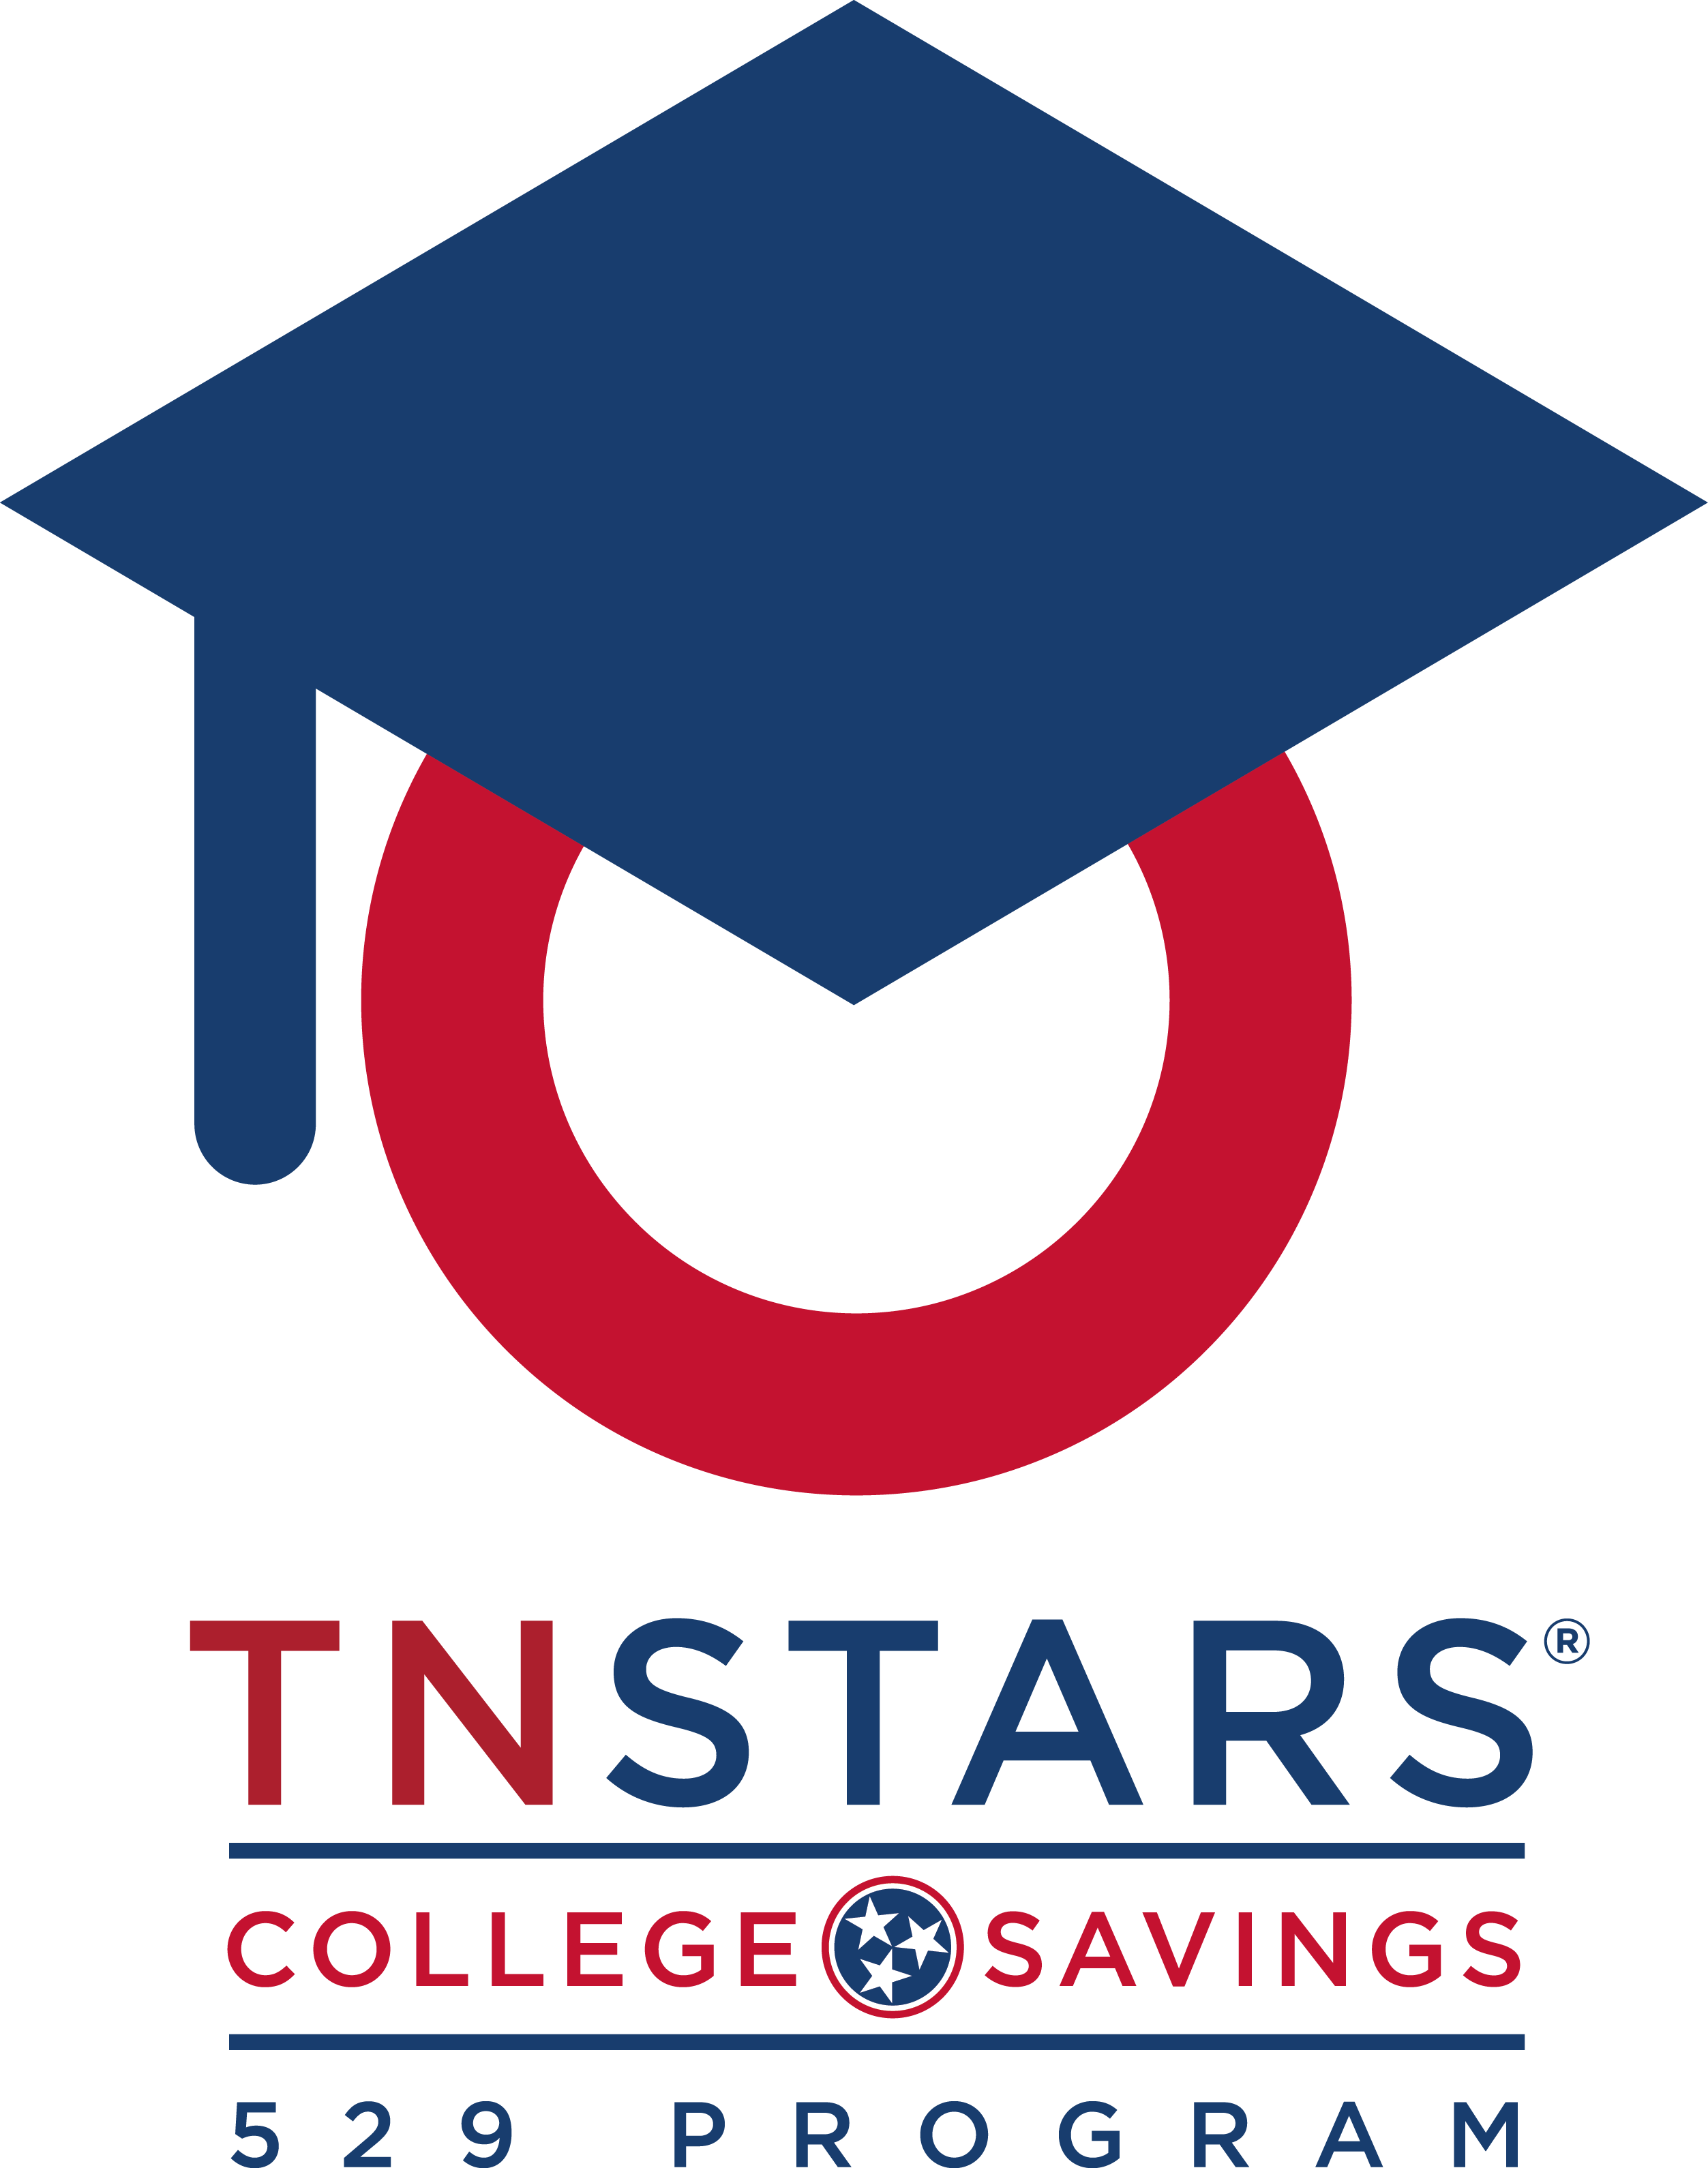 TNStars College Savings 529 Program logo